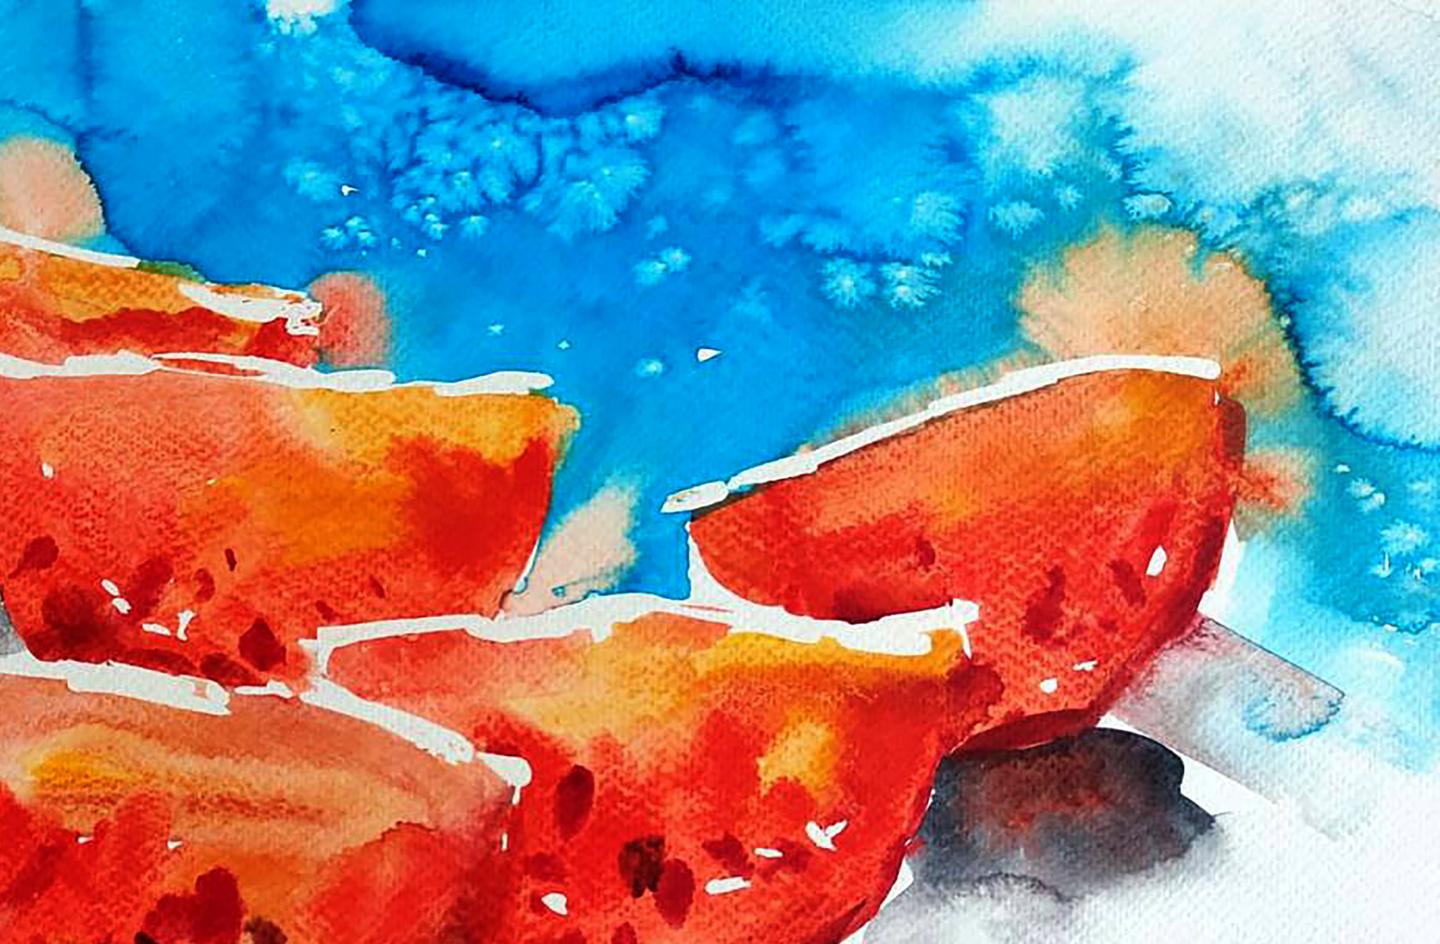 Watercolor painting Tomatoes Elena Klimenko